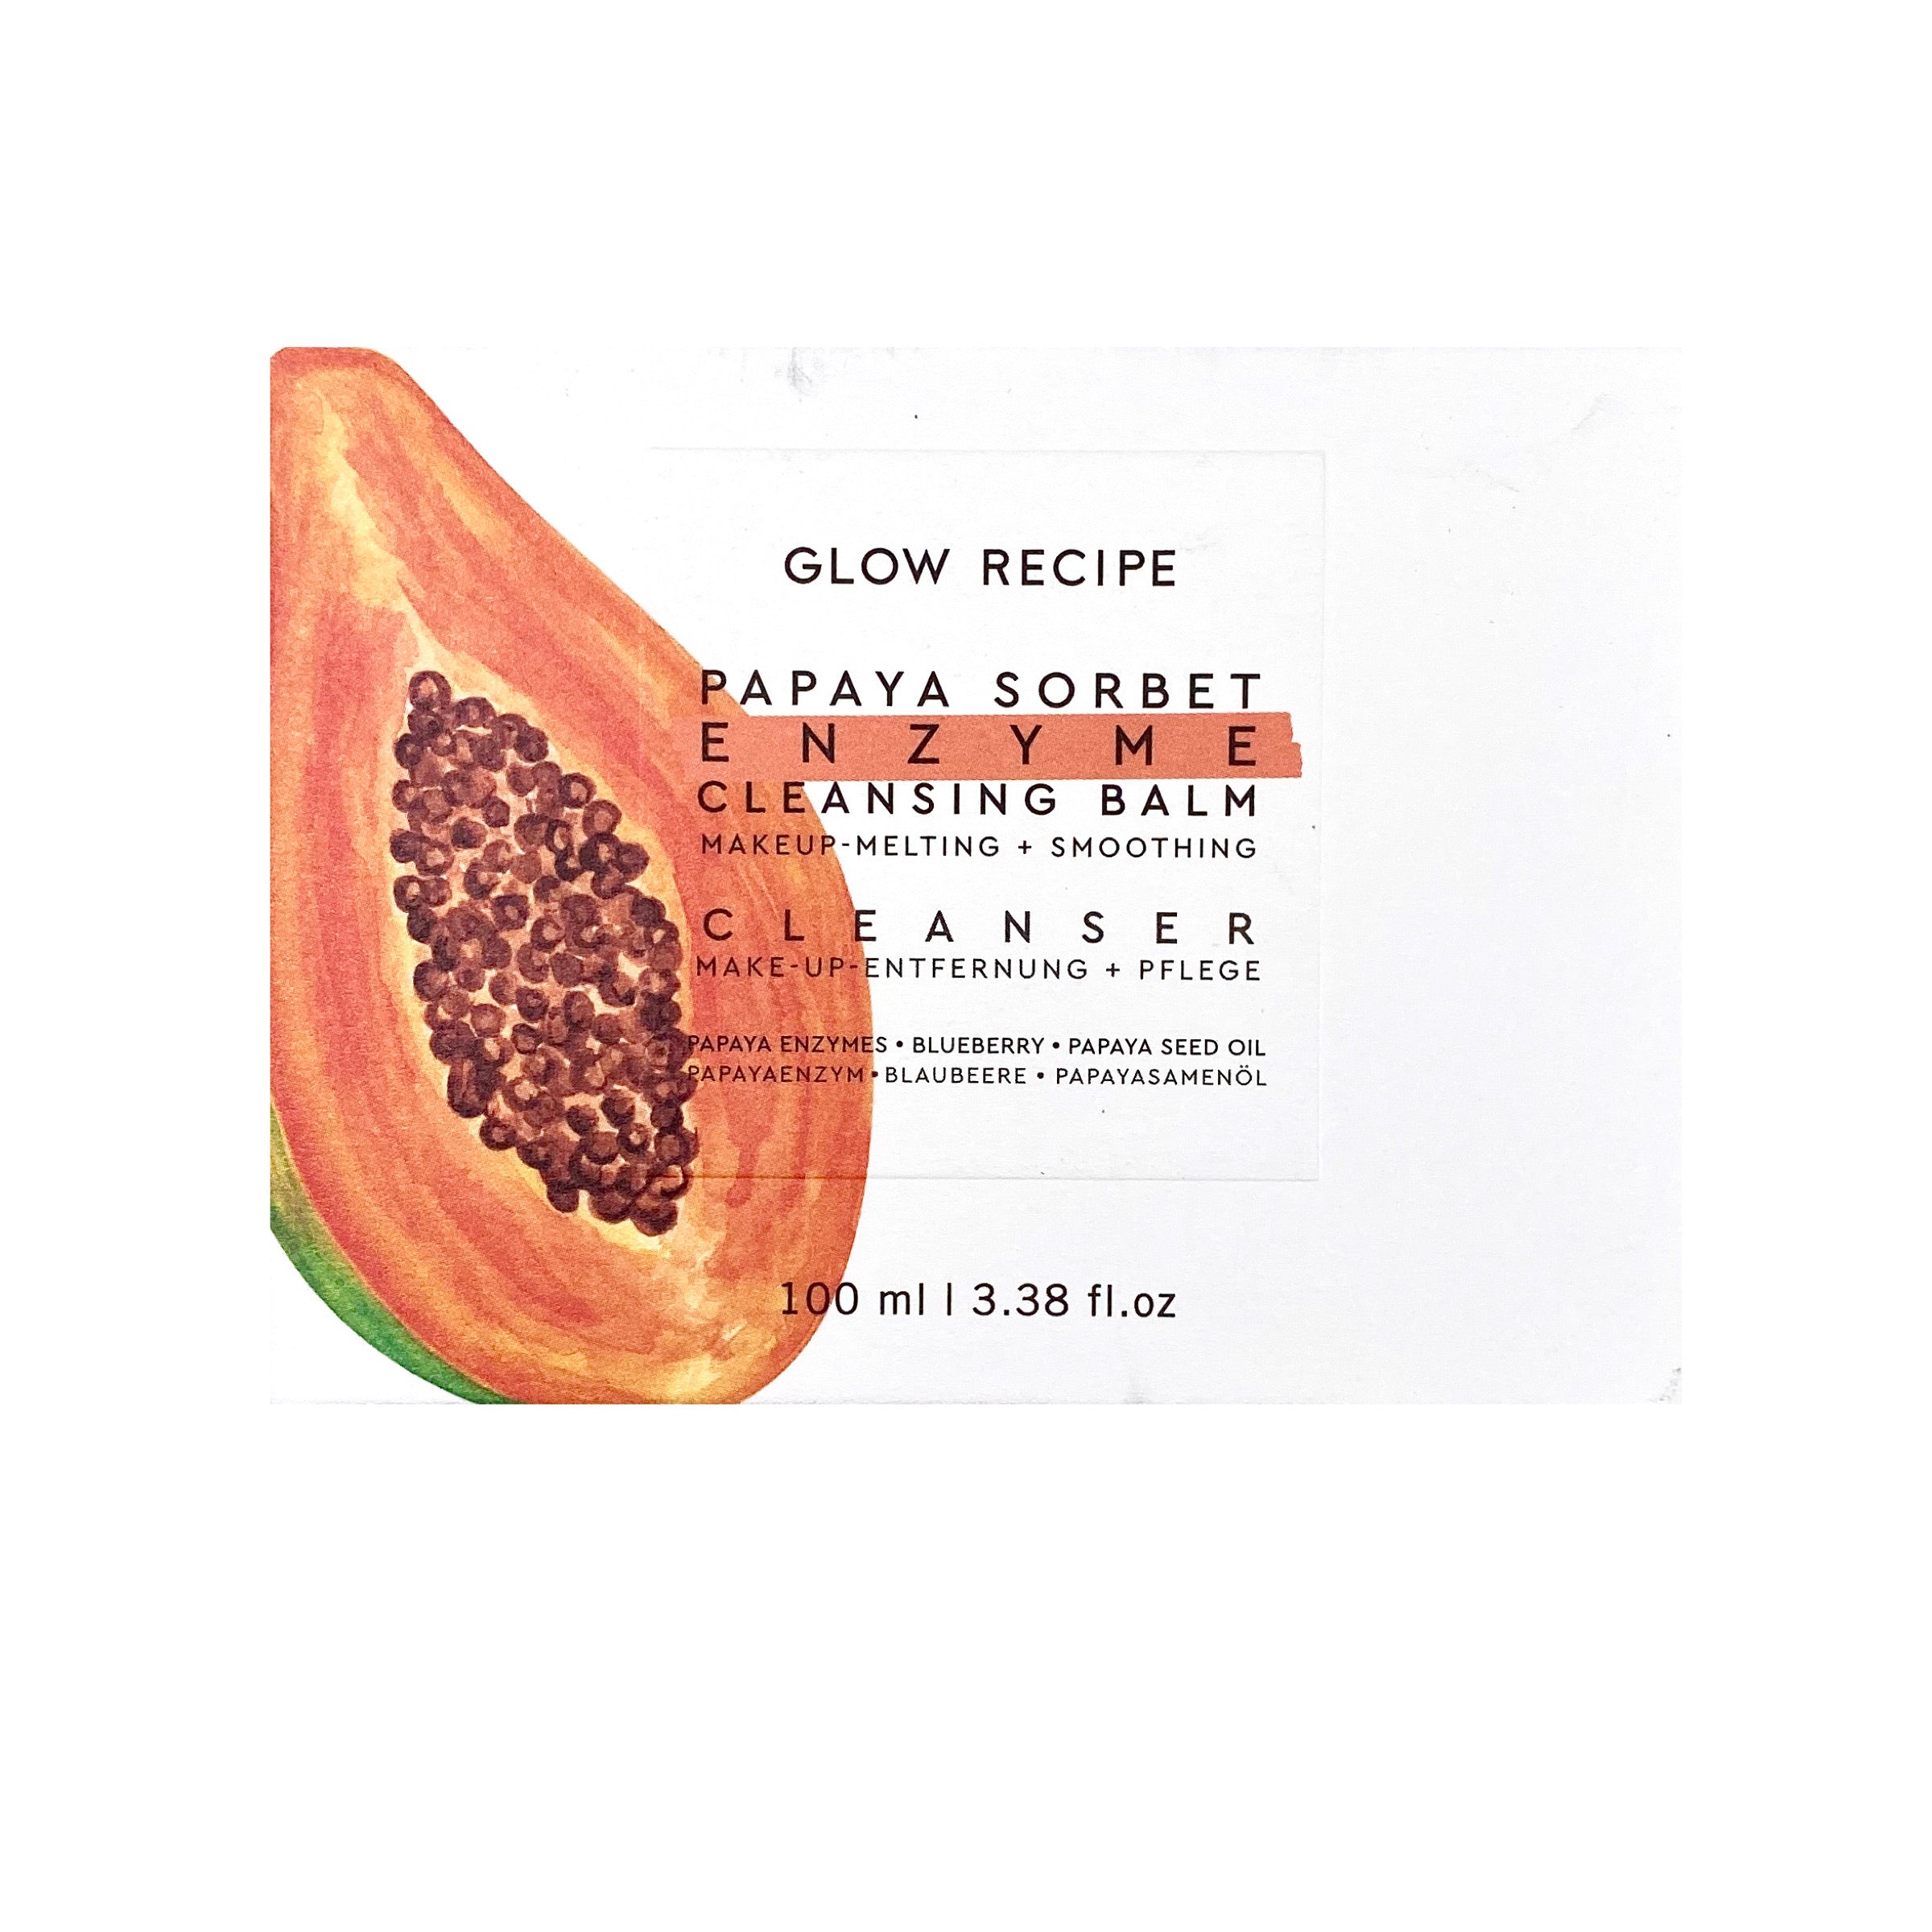 GLOW RECIPE Papaya Sorbet Enzyme Cleansing Balm, 100mL, Cleansing Balm, London Loves Beauty